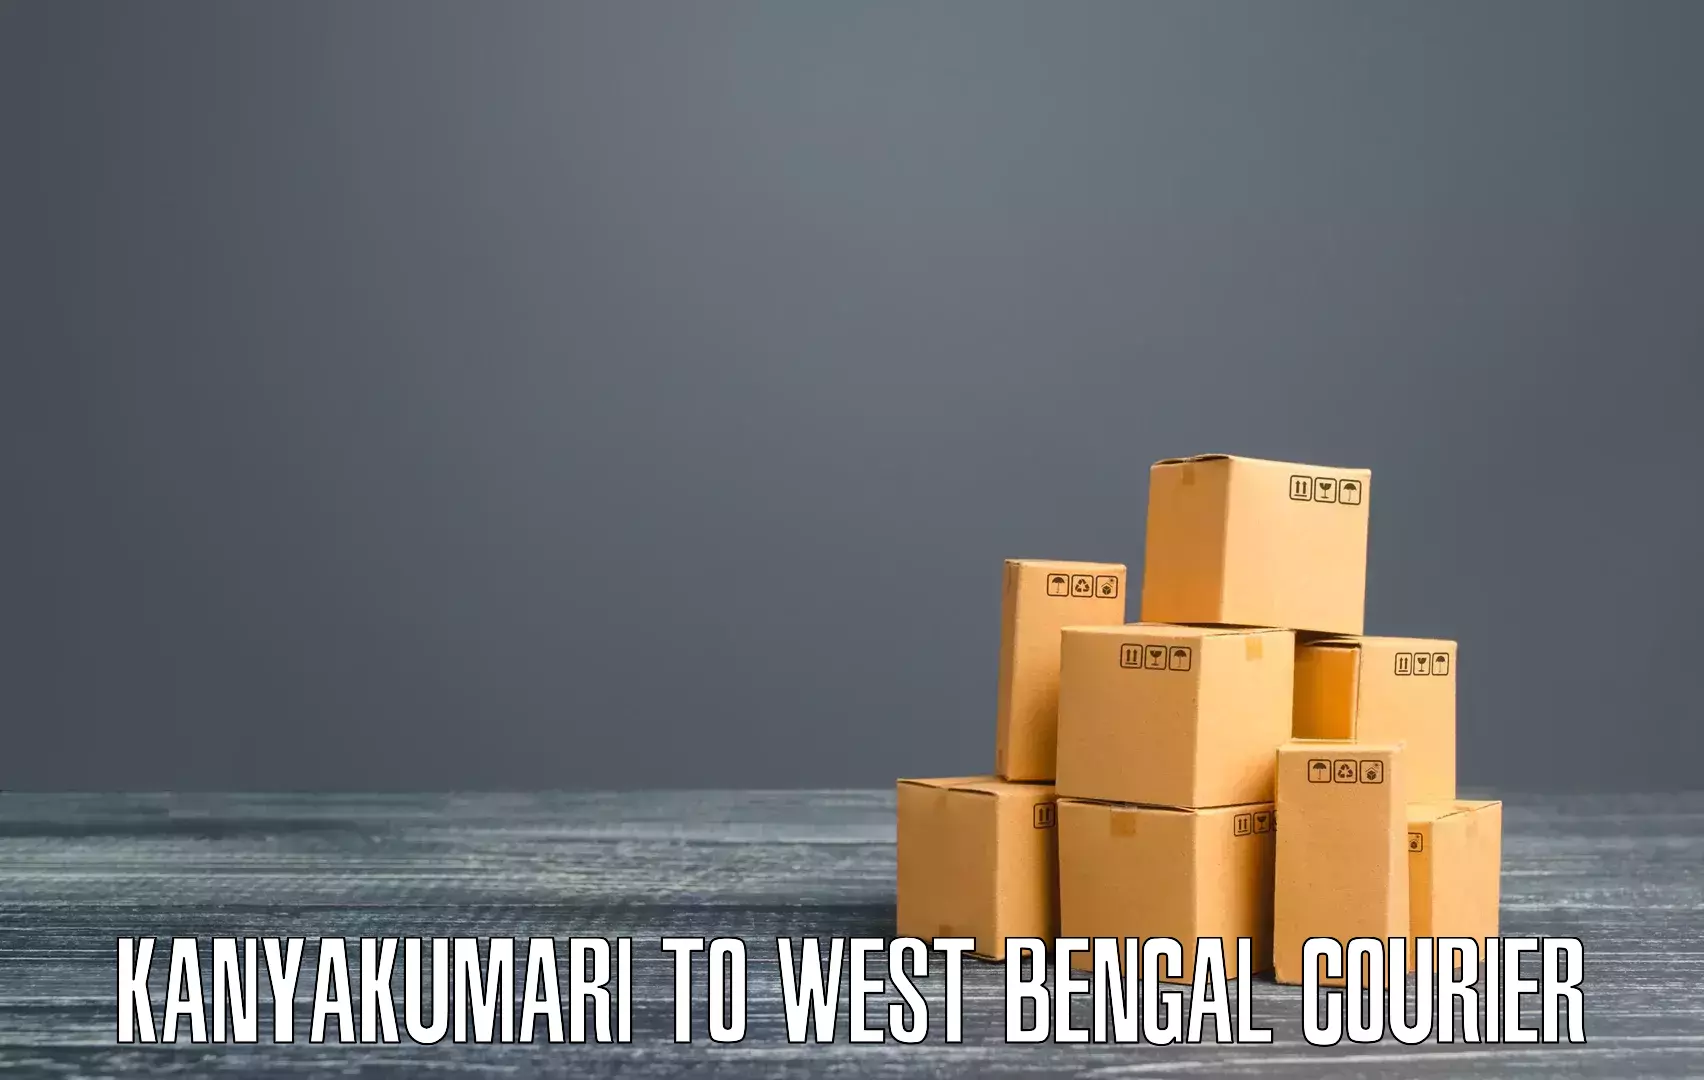 Courier service comparison Kanyakumari to Kolkata Port